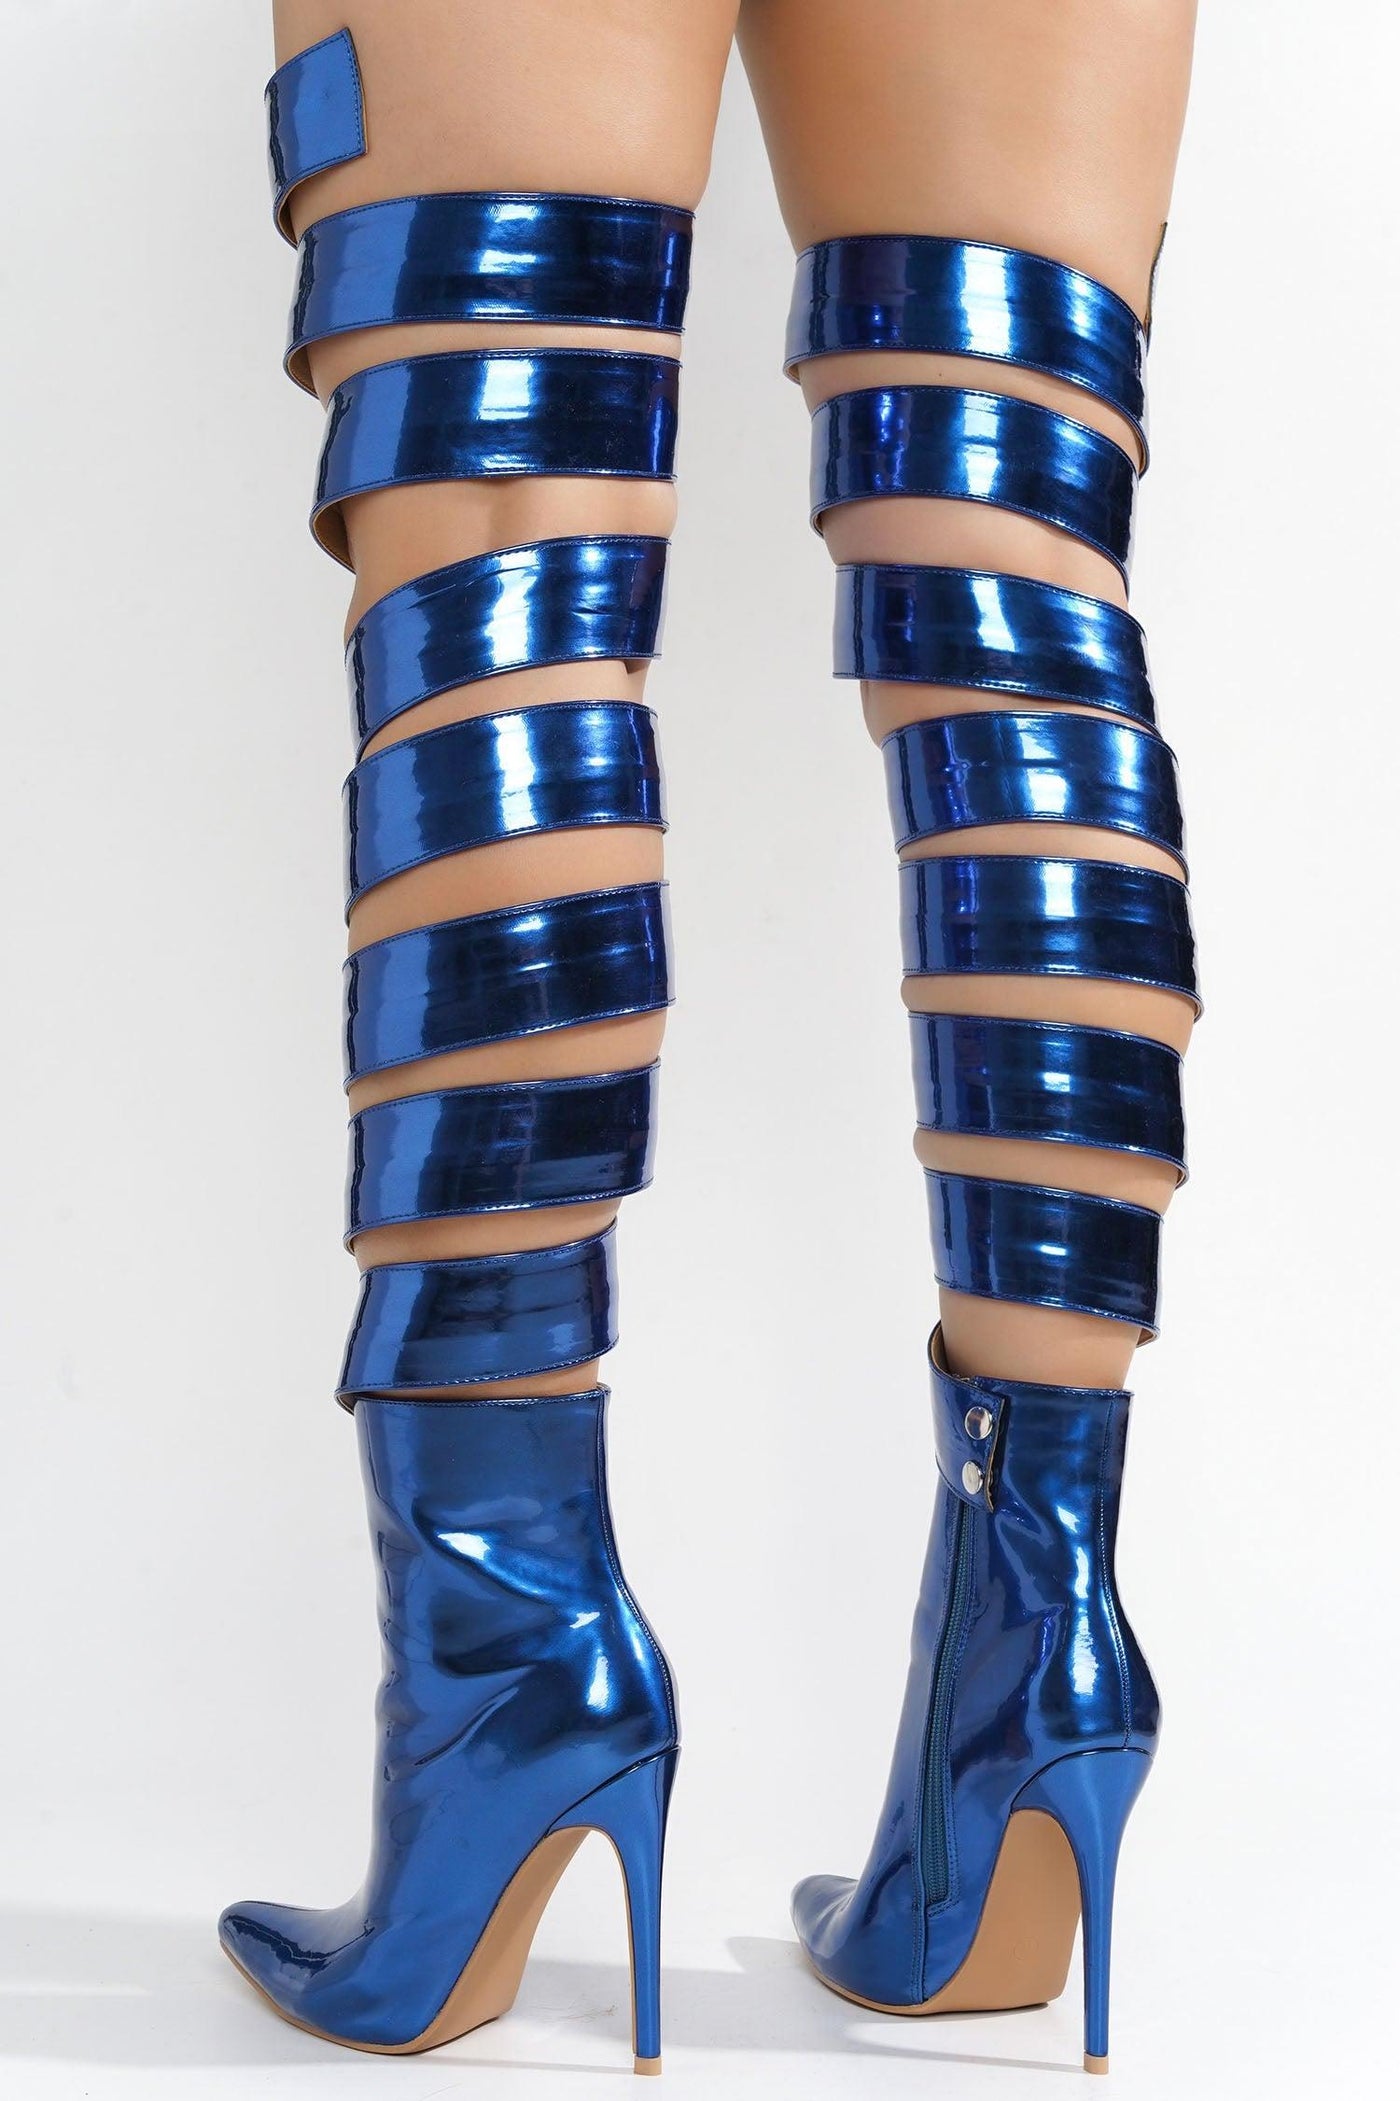 LAPEL - BLUE Thigh High Boots